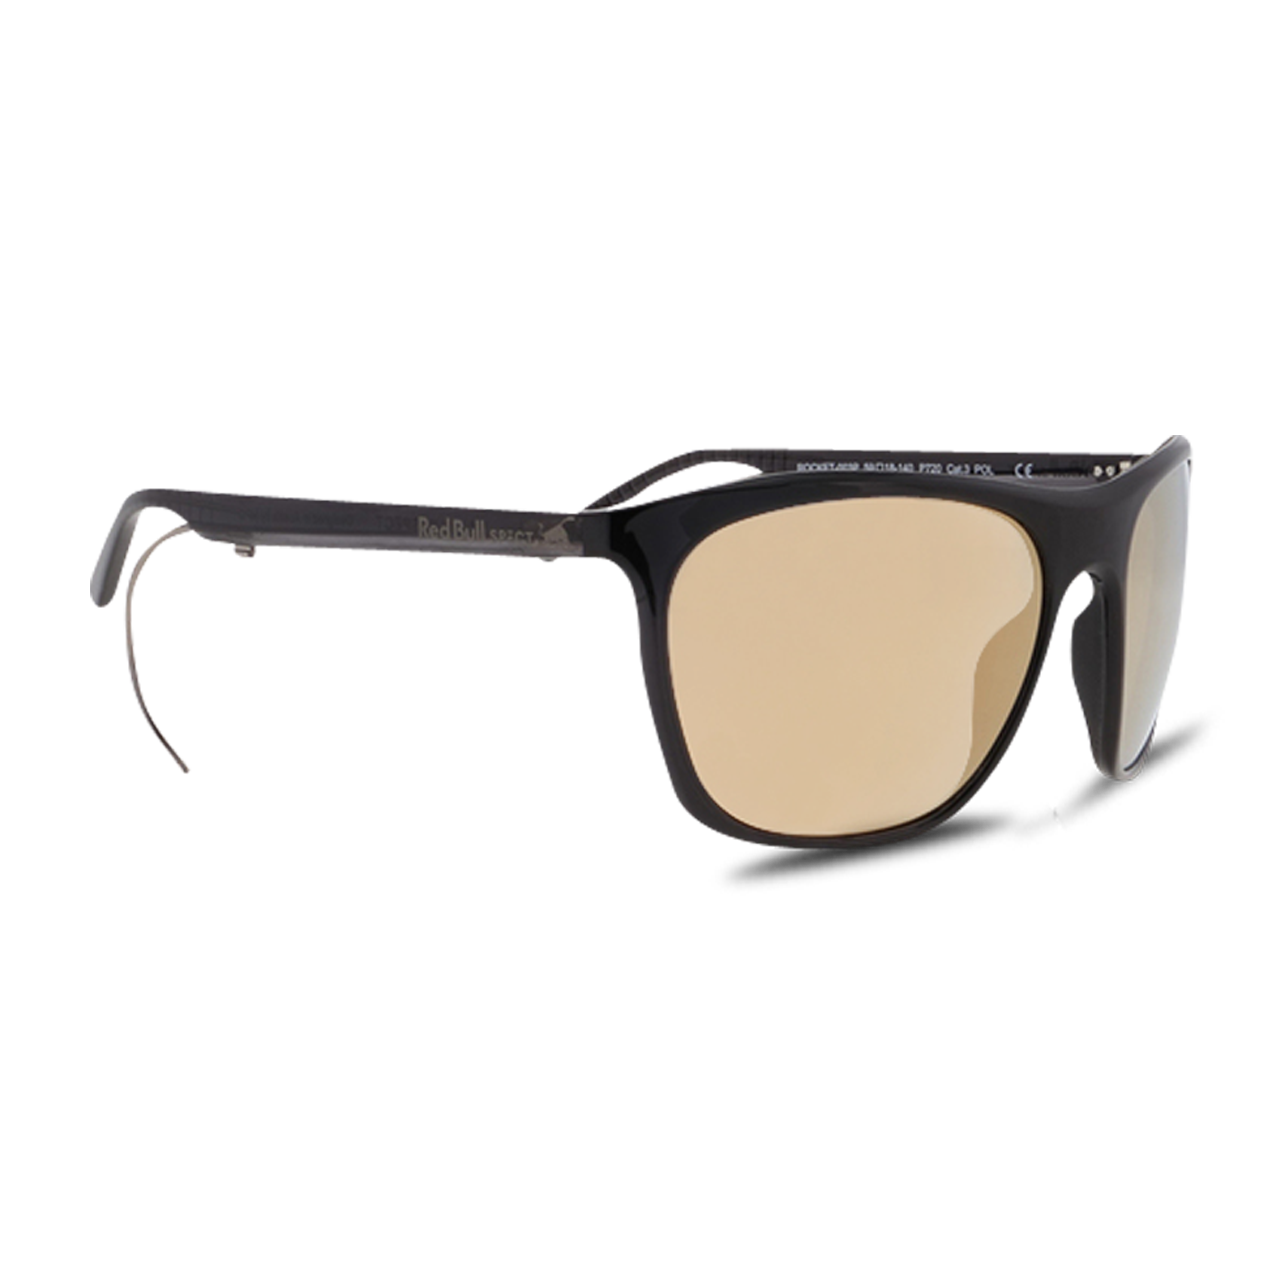 Rockstar Edge Sunglasses | handmade – Nell Styler